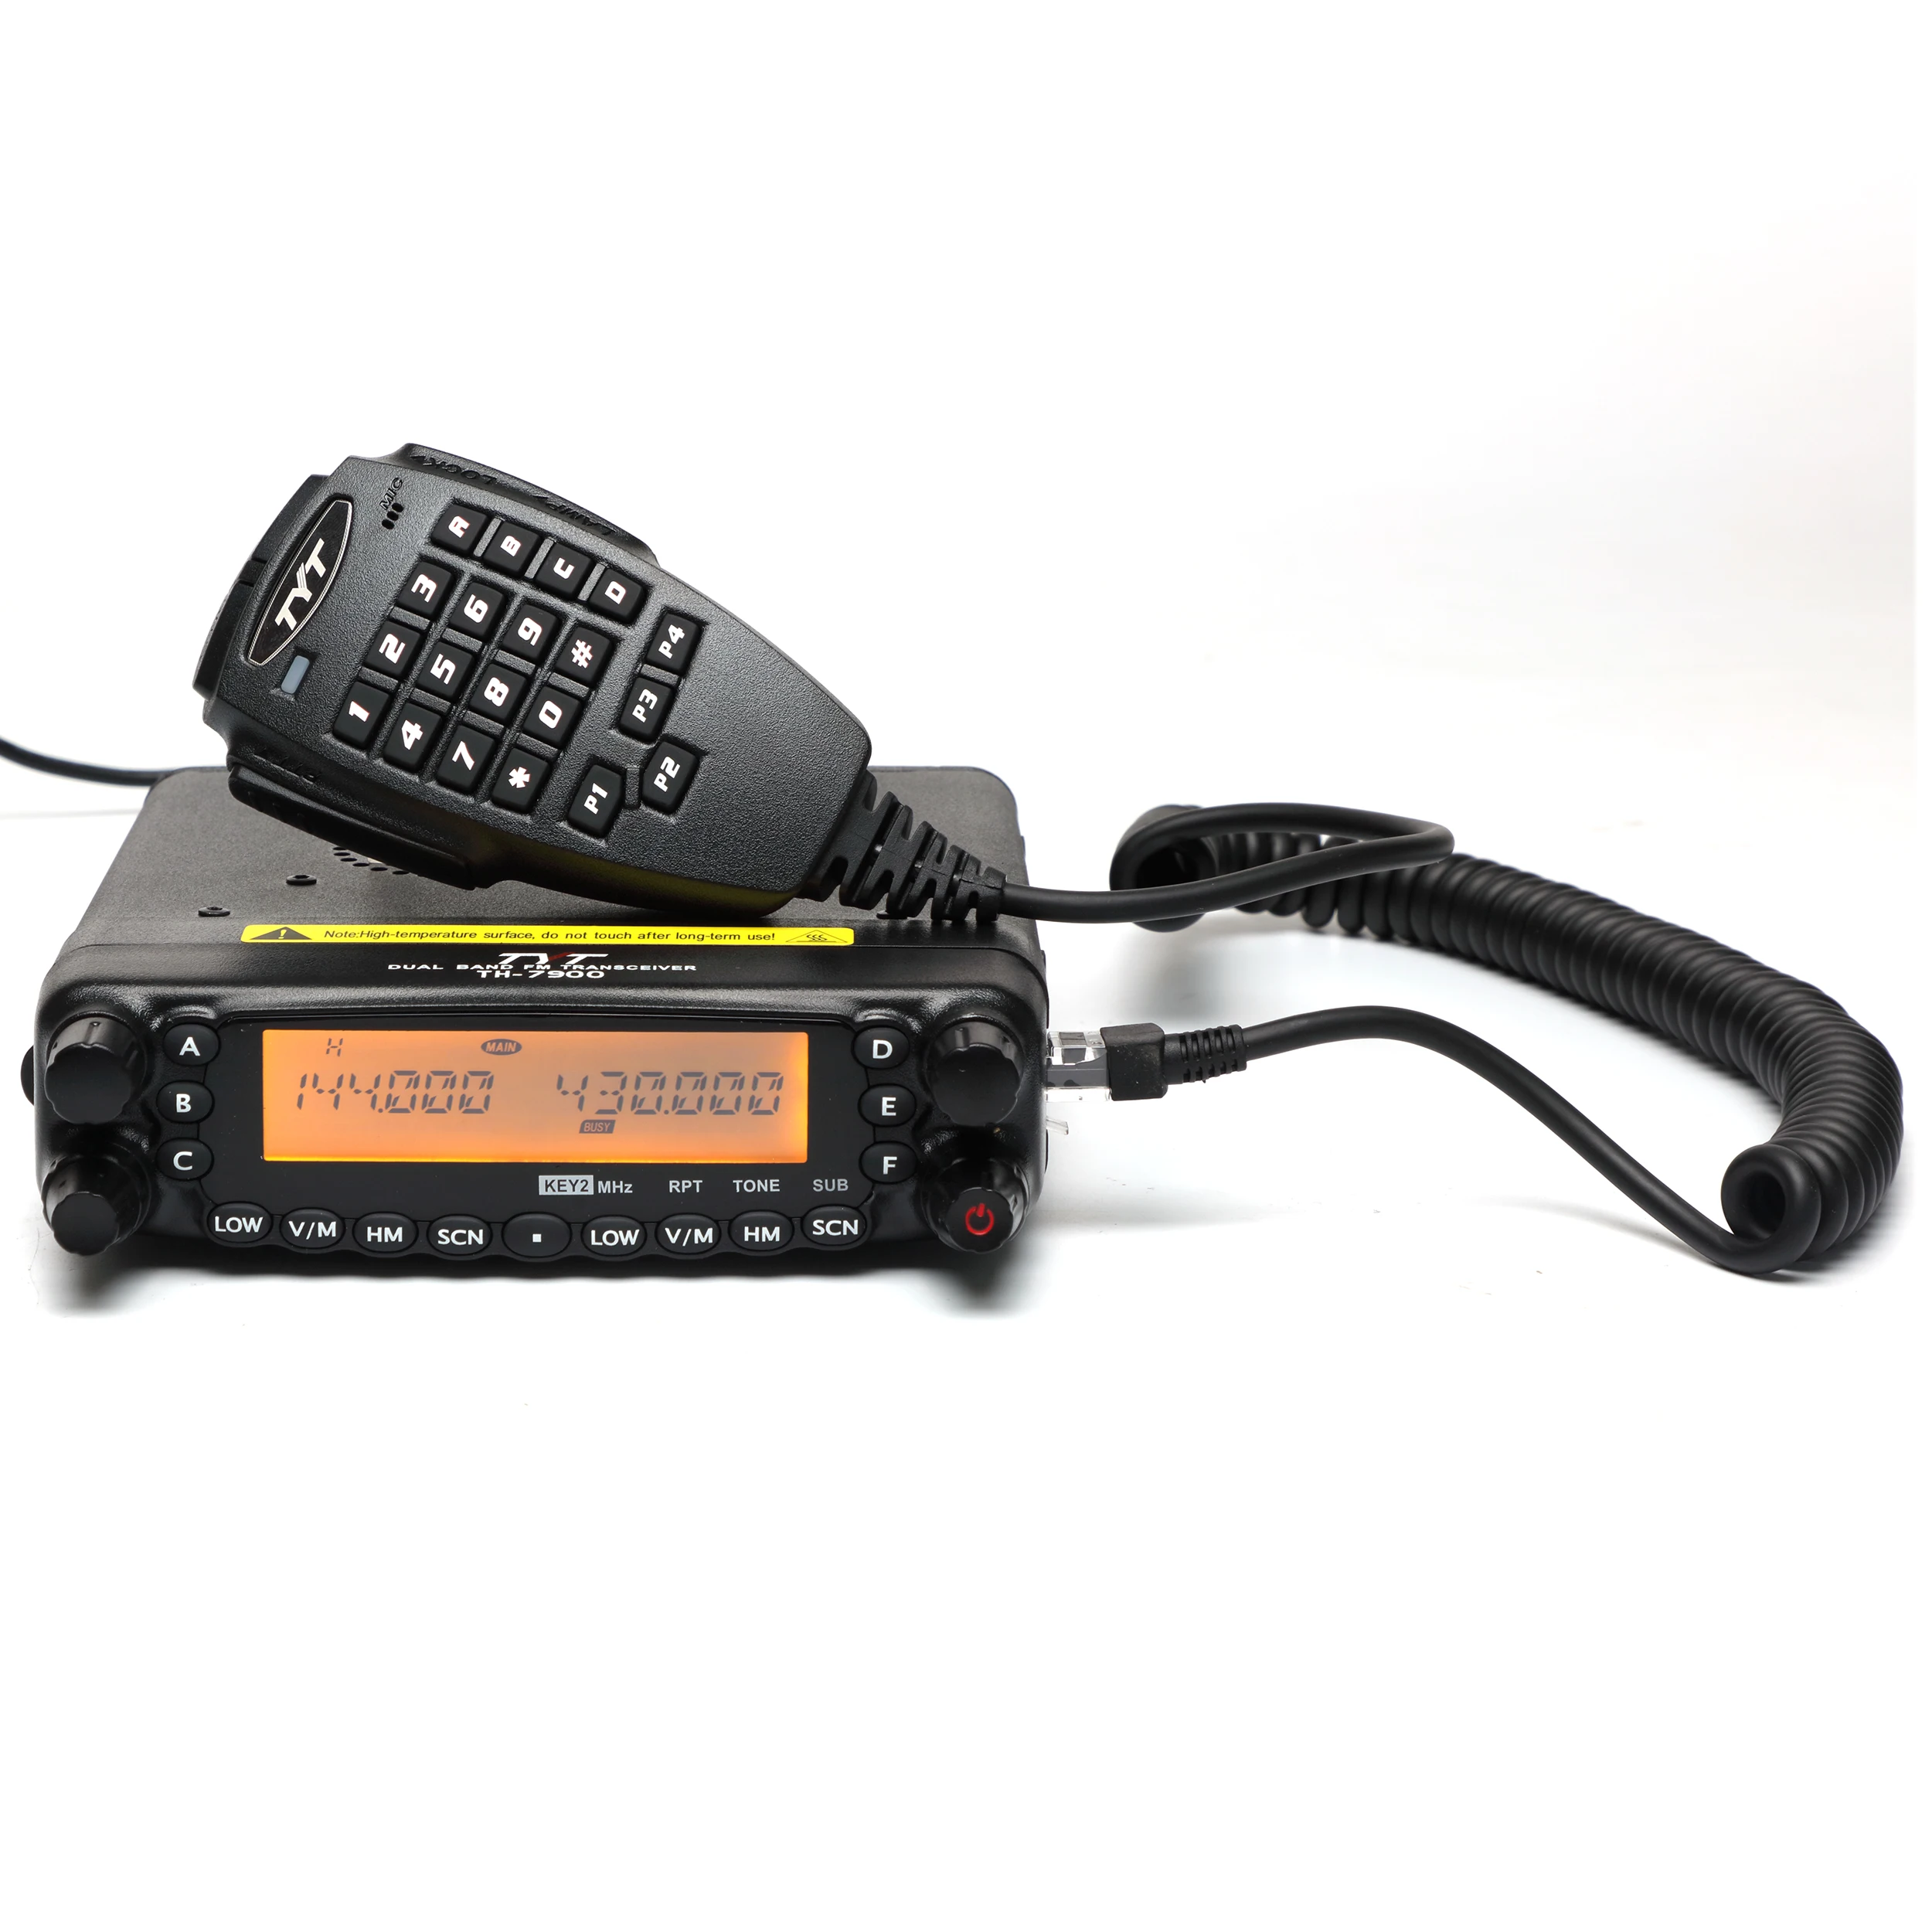 

TYT TH-7800 Dual Band Mobile Radio 136-174/400-480MHz 50W VHF/UHF Radio High Power Car Mobile Radio